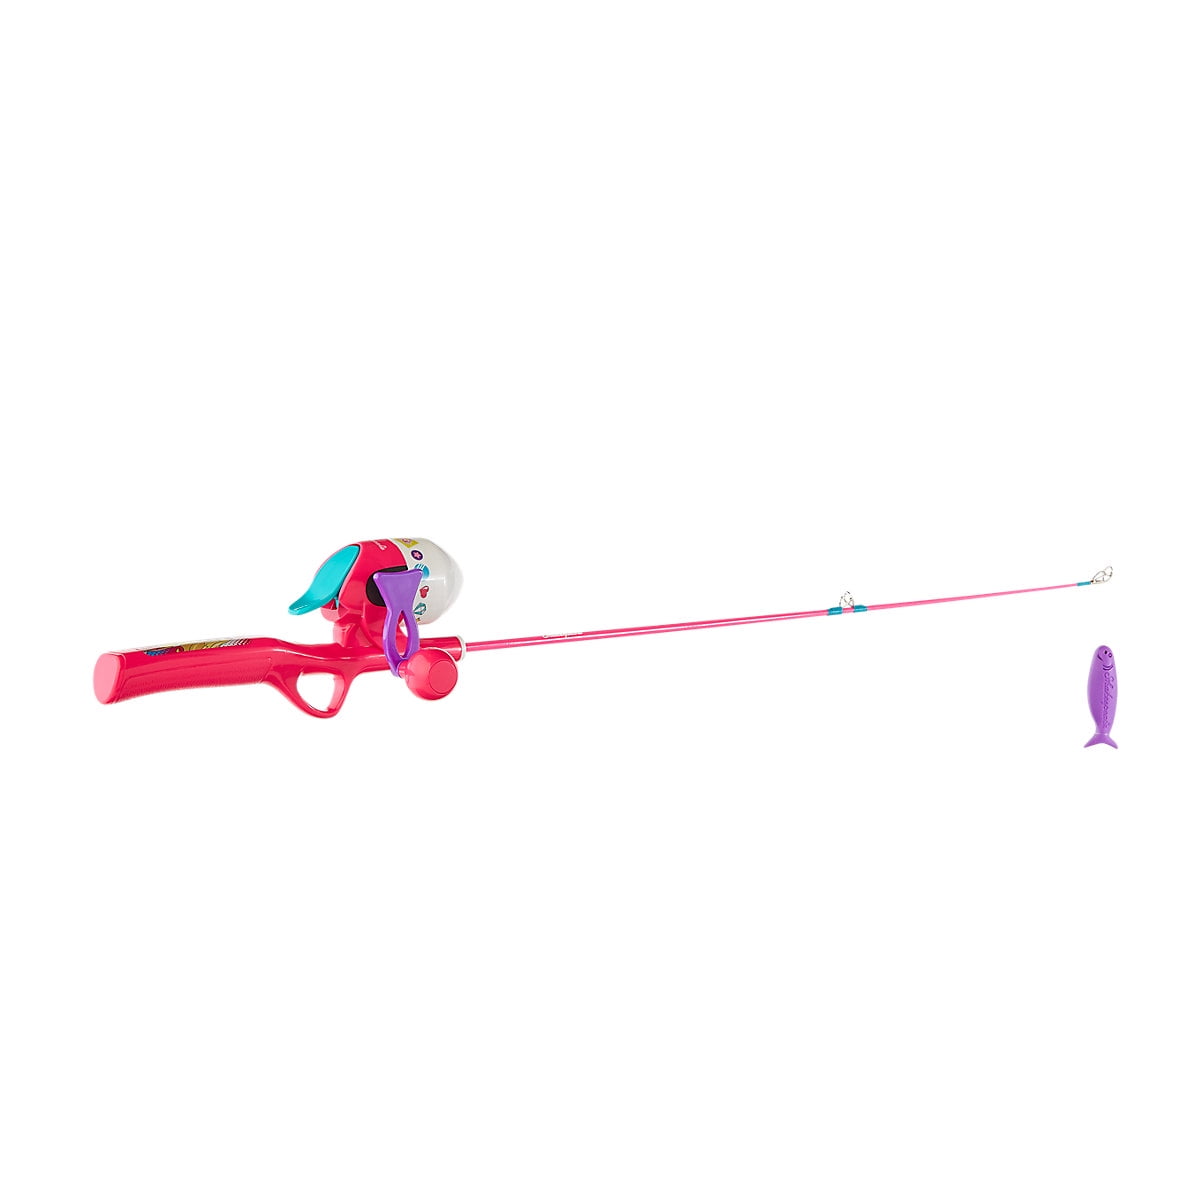 Shakespeare Mattel Barbie Kit 2'6 Spincast Combo - Kids Fishing